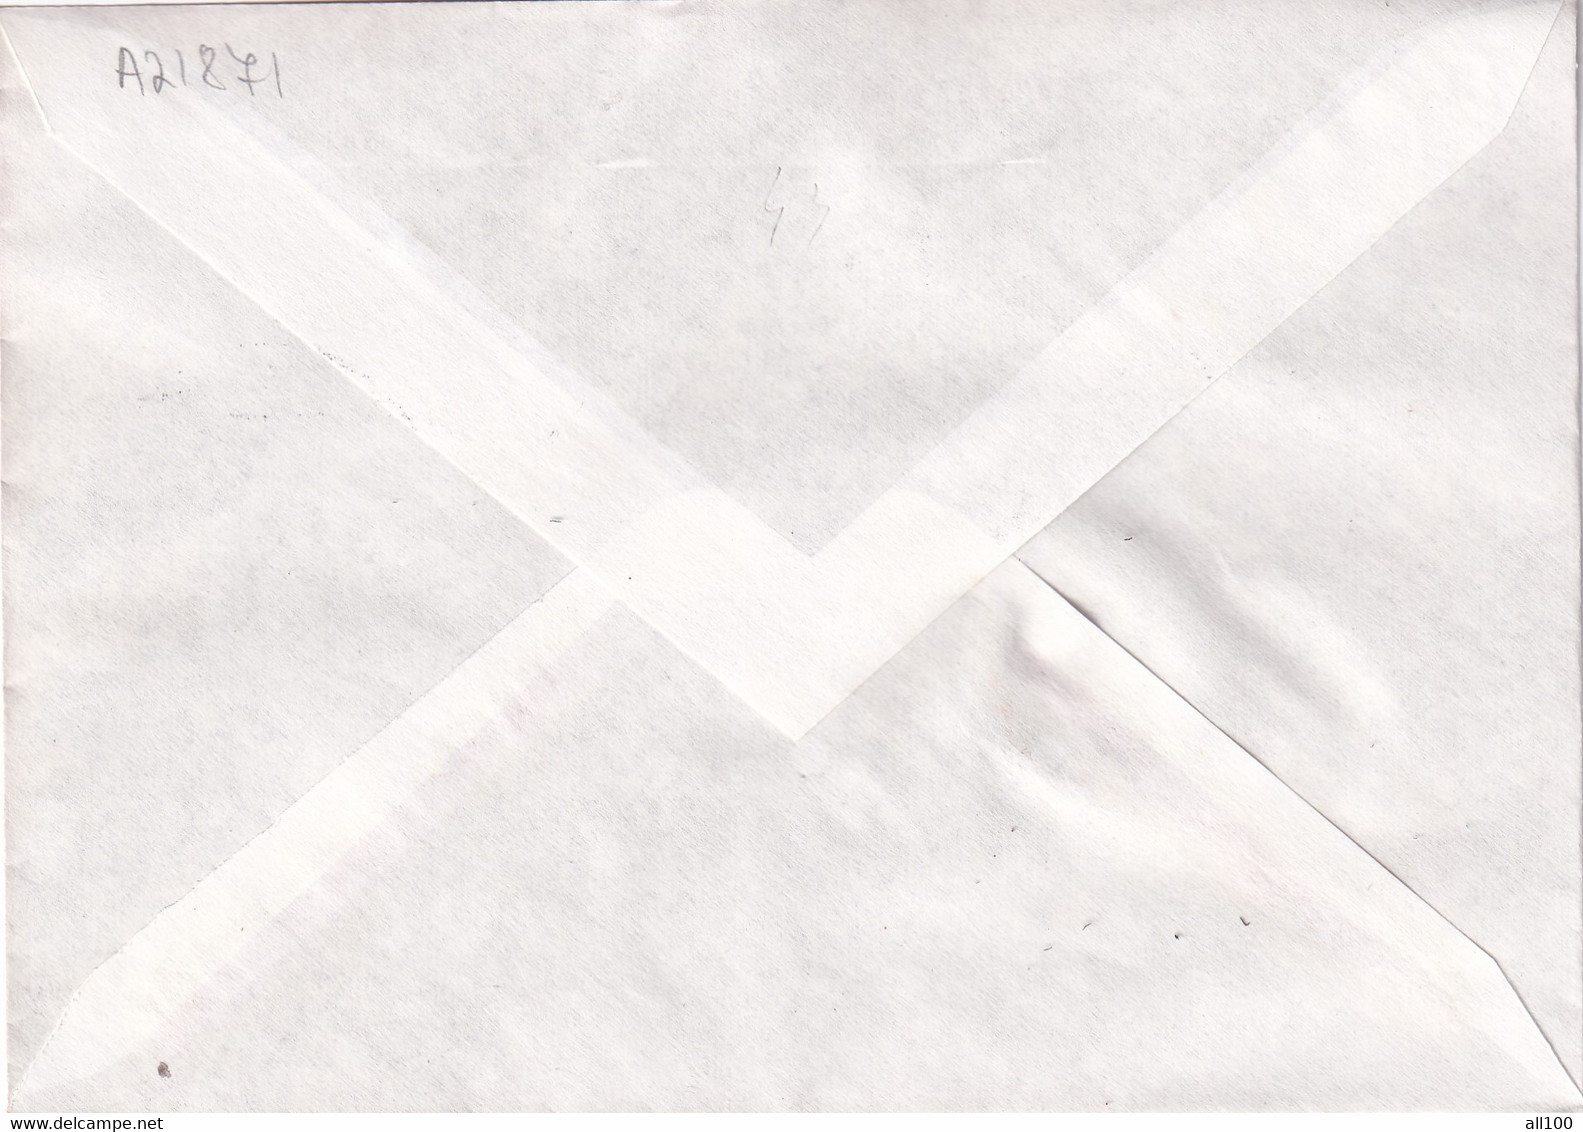 A21871 - Conseil De L'Europe Strasbourg Cover Envelope Unused 1980 Stamp France - Lettres & Documents